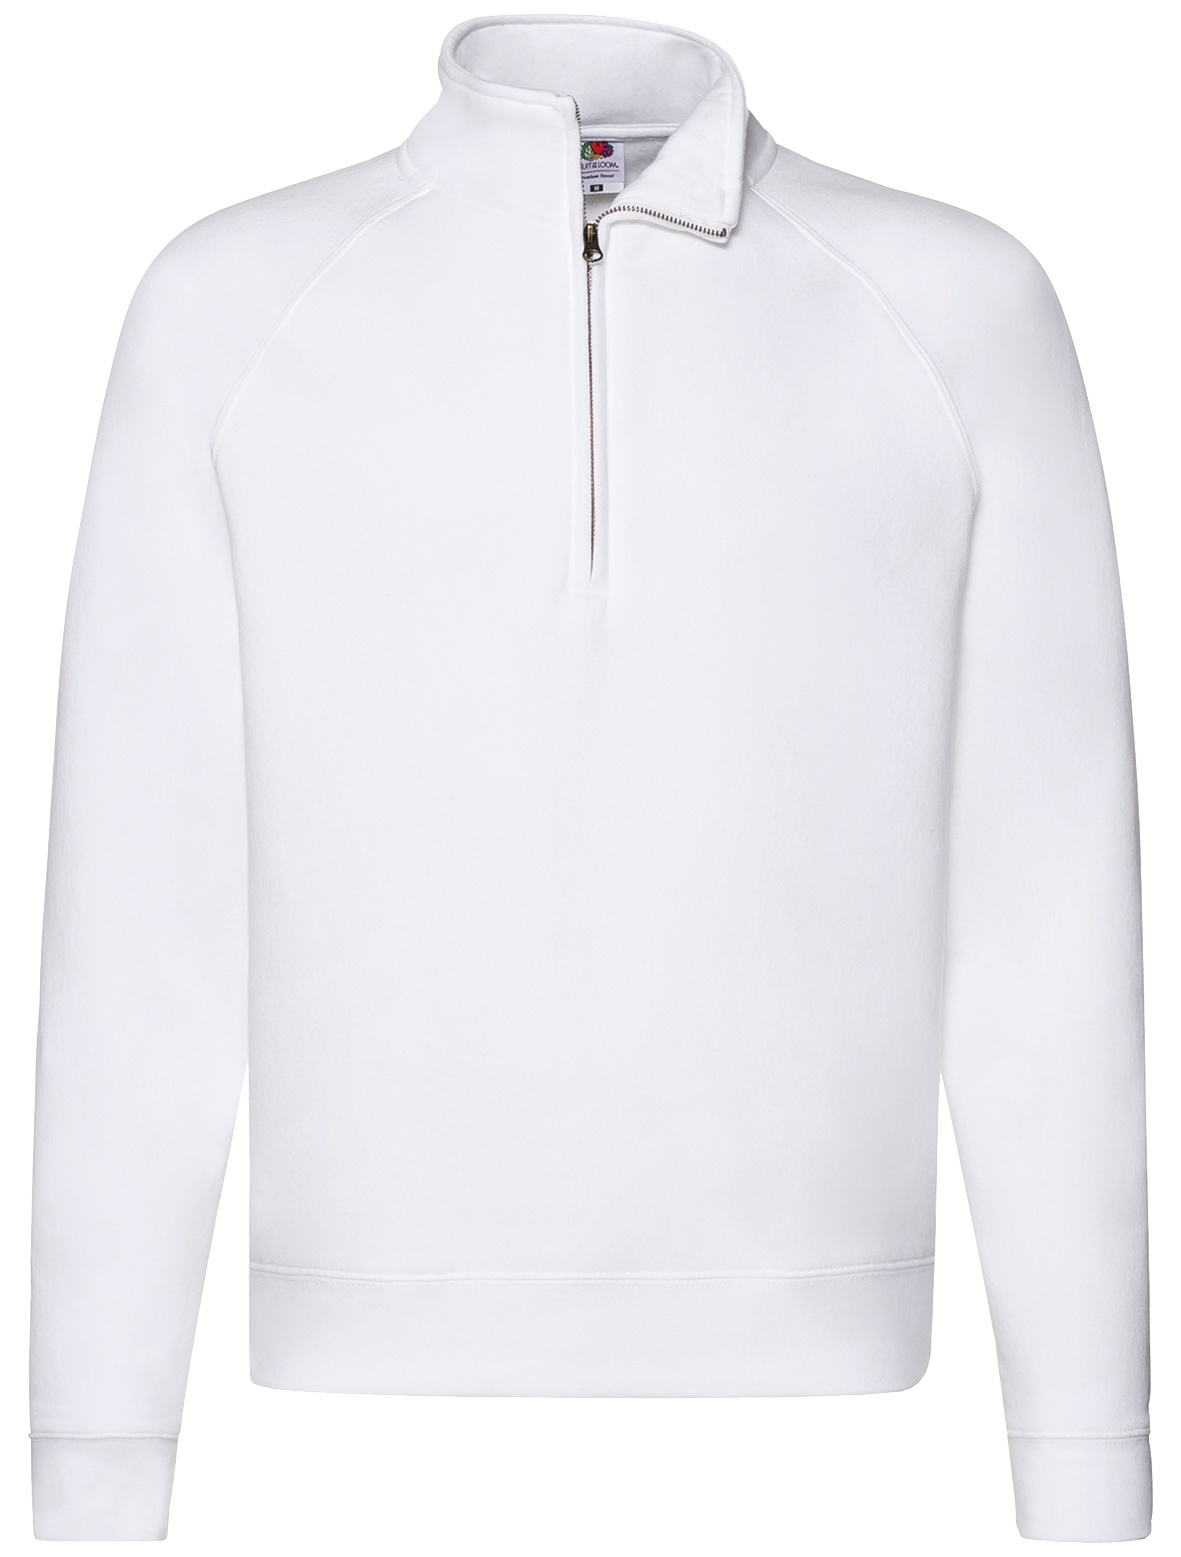 Fruit of the Loom Premium PREMIUM ZIP NECK SWEAT - Herren Sweatshirt mit Reißverschluss, weiß, XL